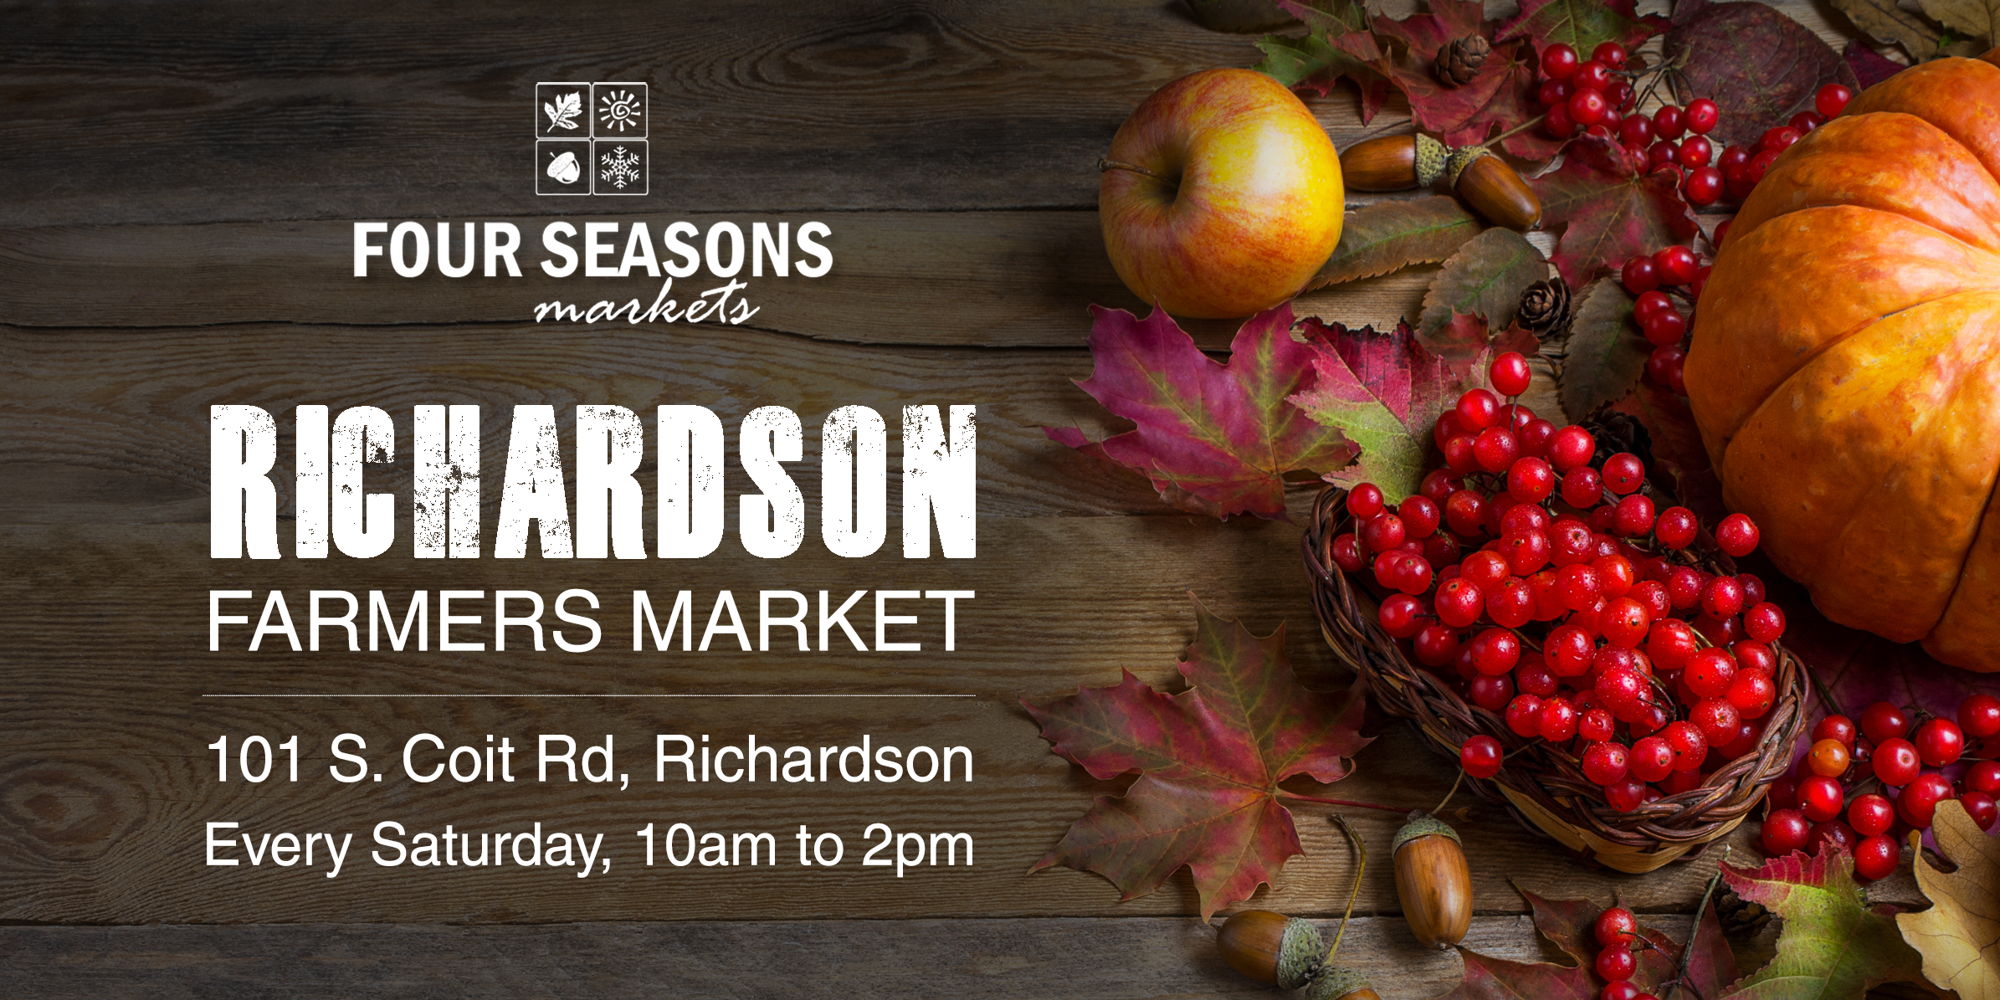 Richardson Farmers Market promotional image